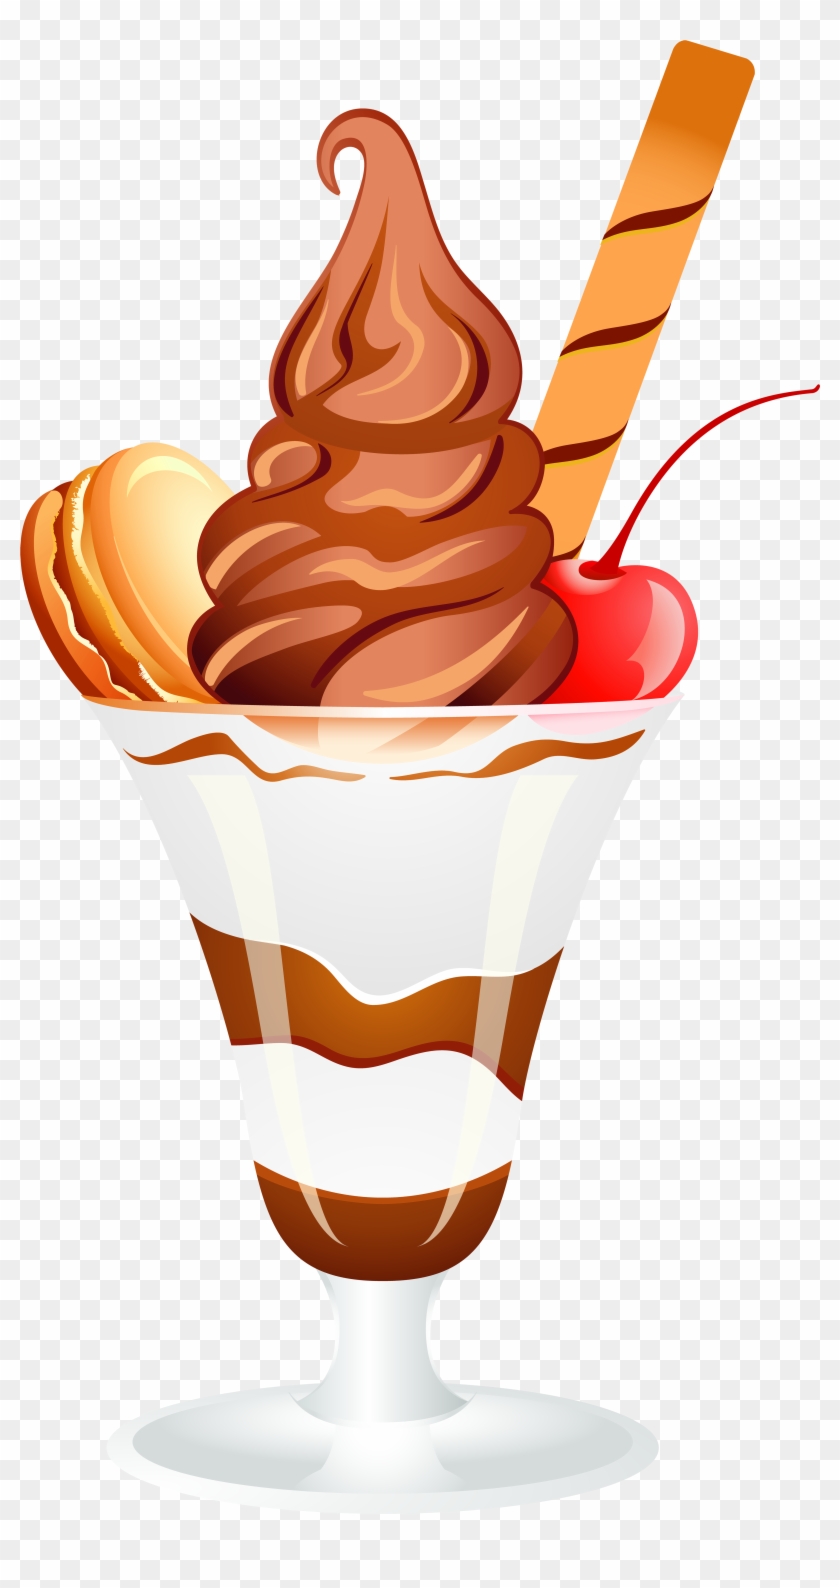 Chocolate Ice Cream Sundae Png Clip Art Image - Ice Cream Sundae Png #171822